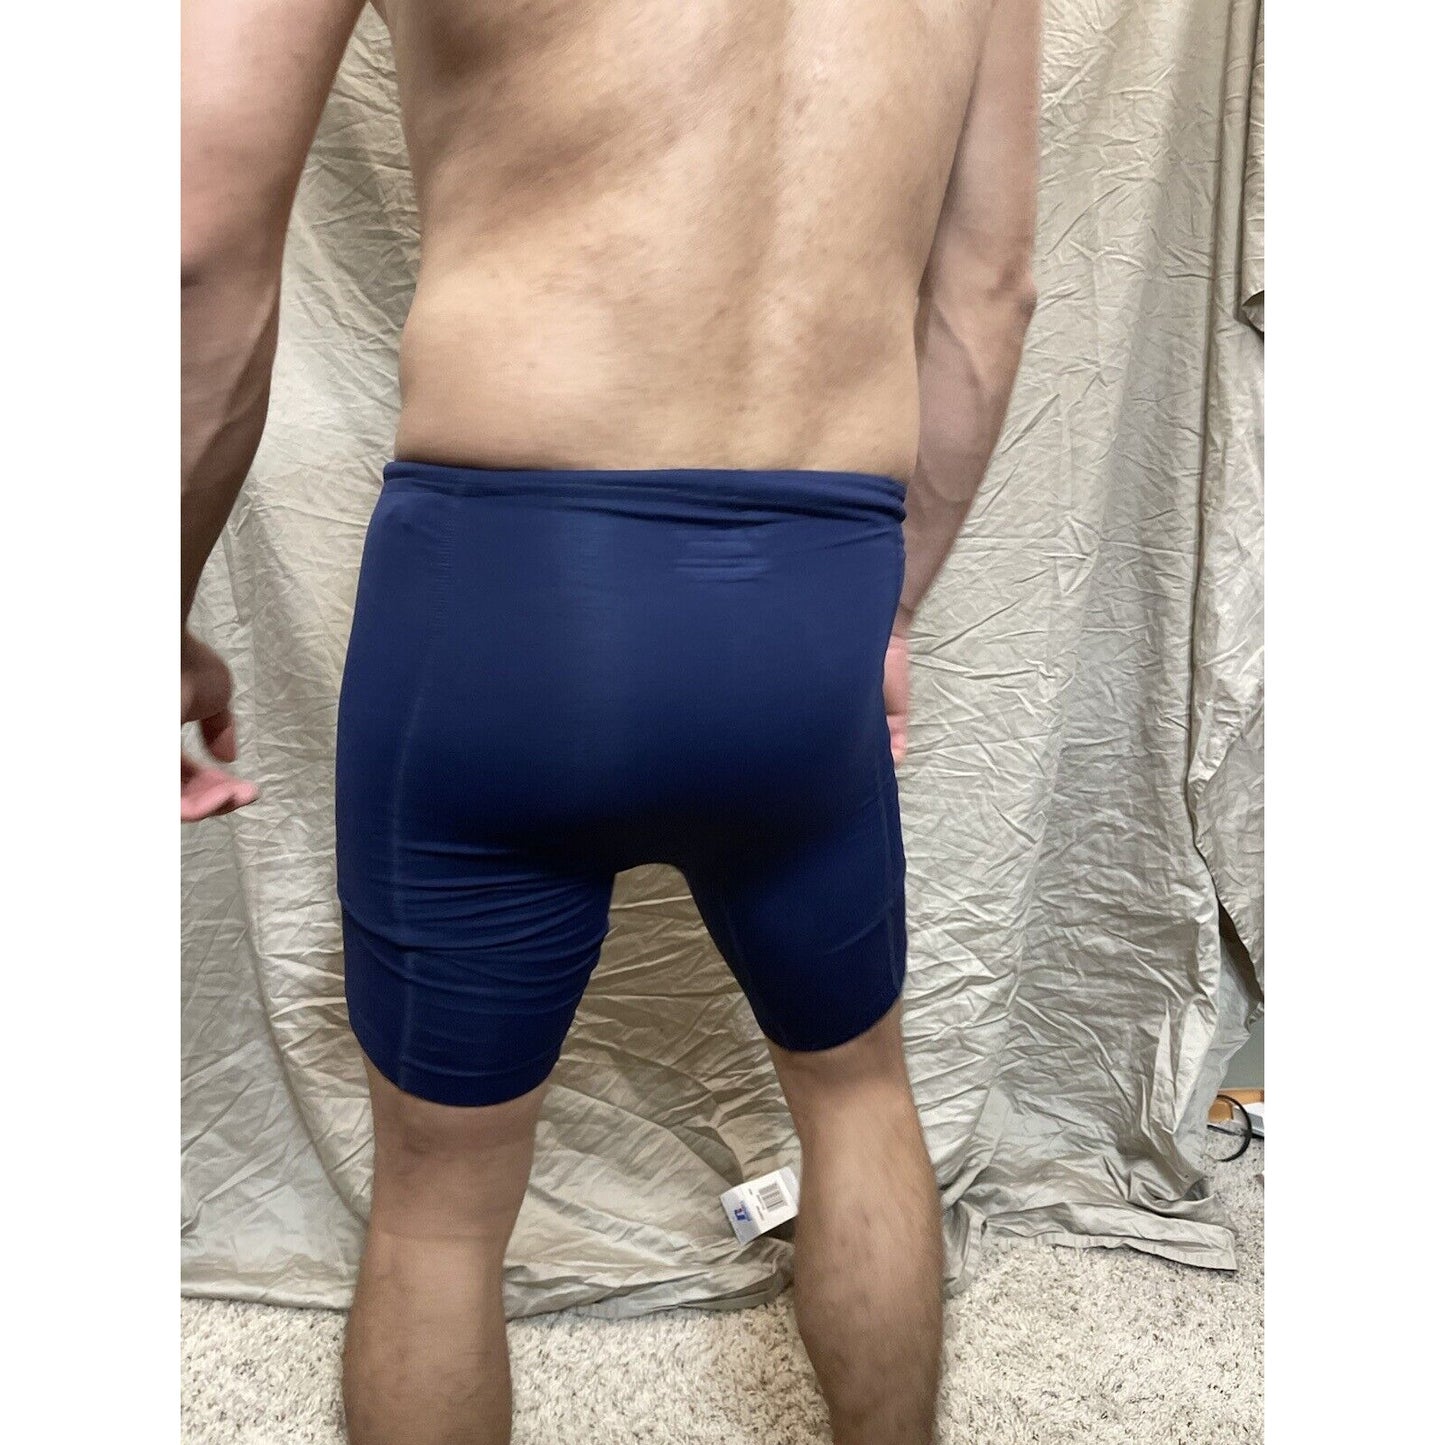 Men's brooks nylon spandex Navy Blue XS extra small compression shorts